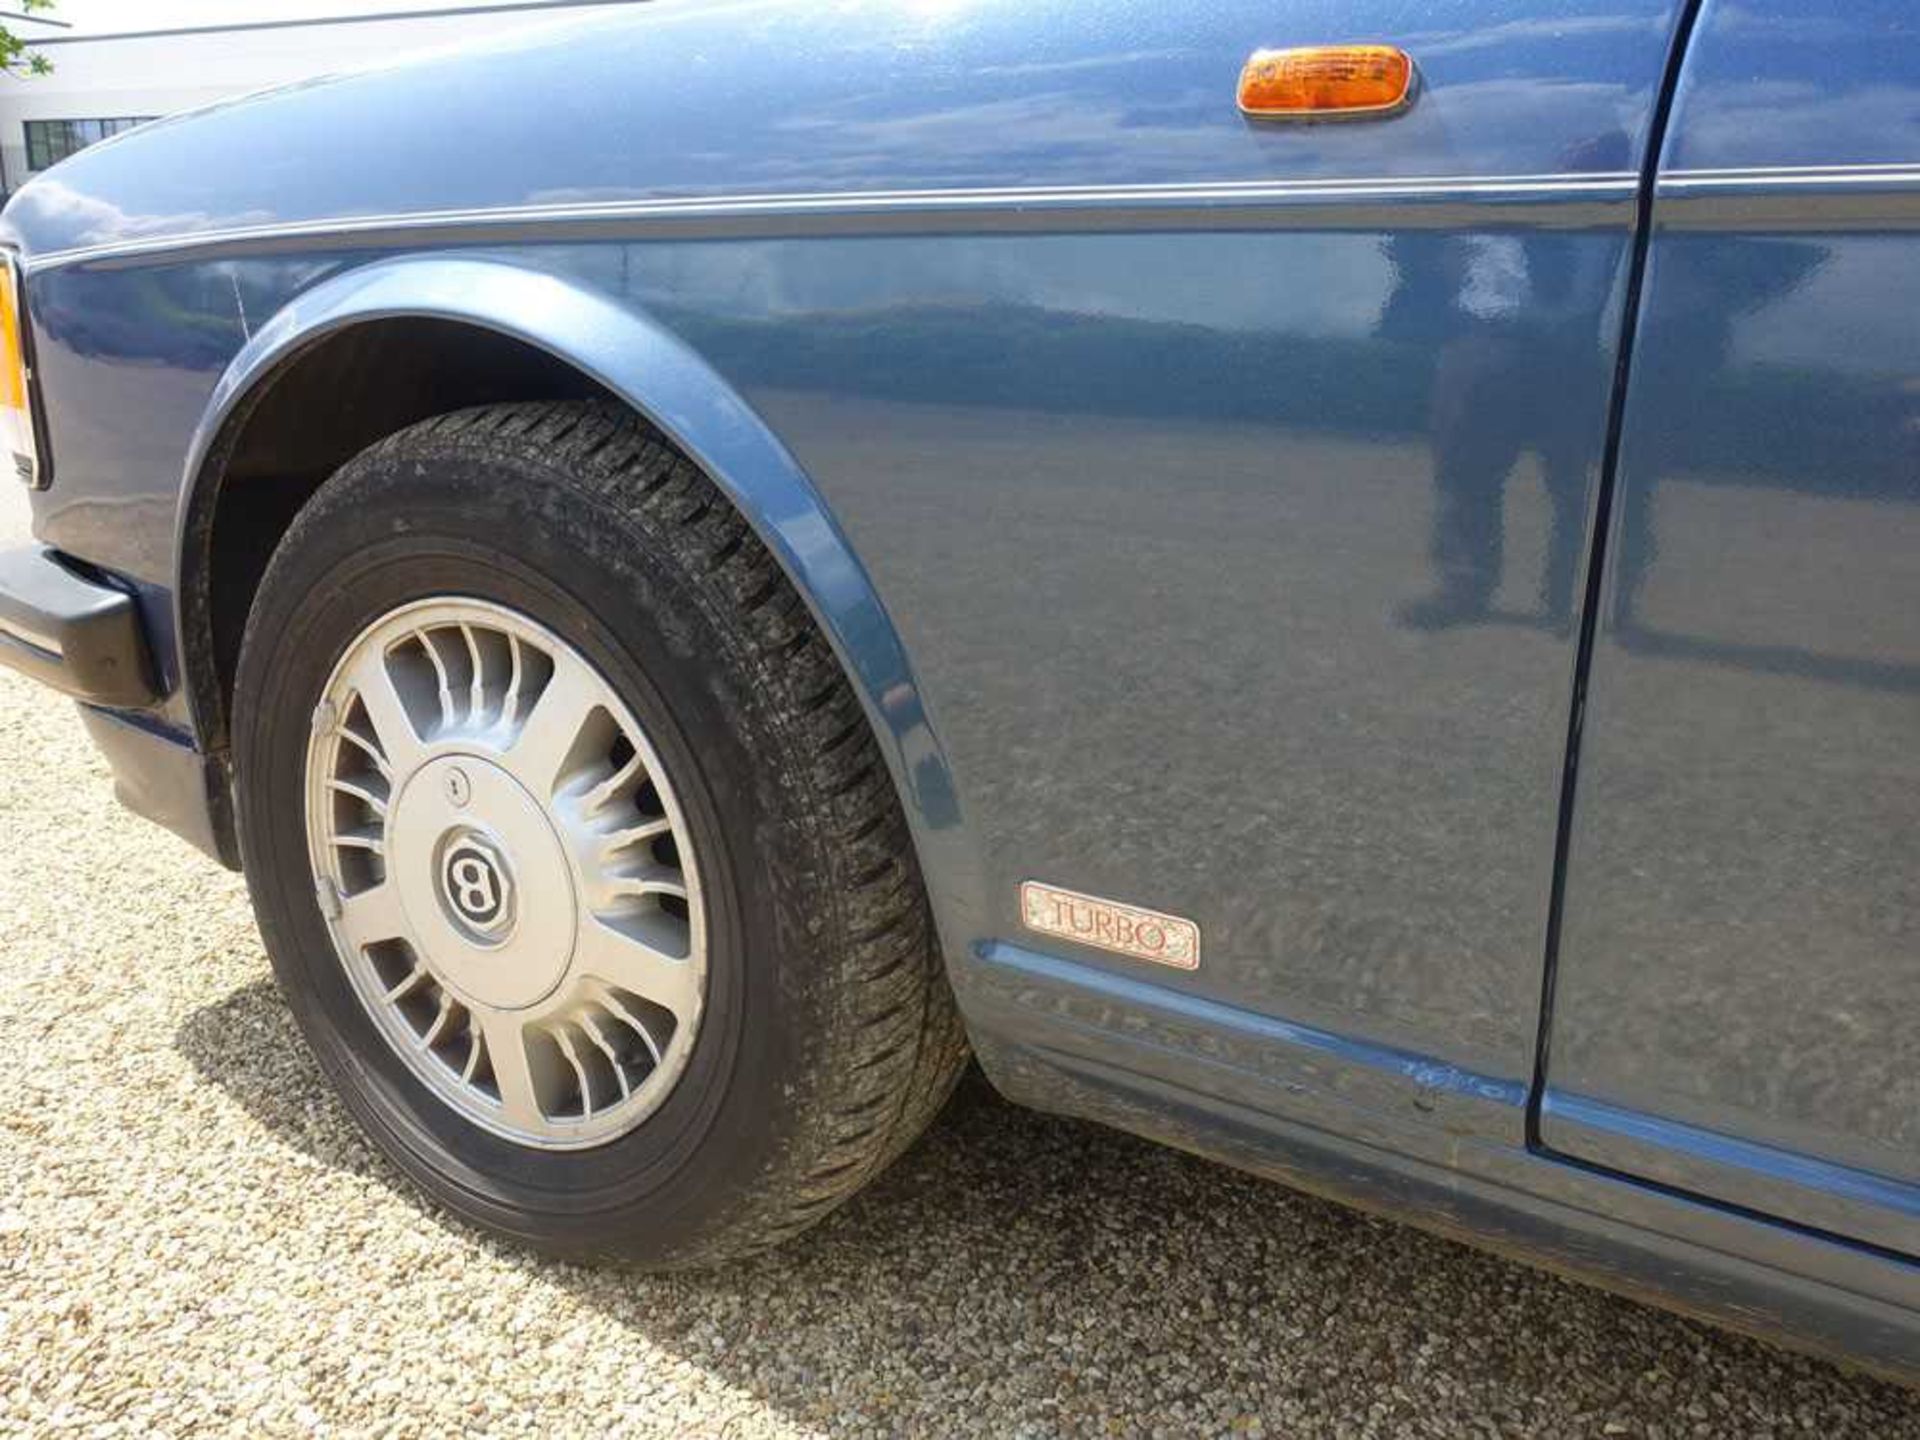 1989 (F registration) Bentley Turbo R 6750cc V8 automatic 4 door saloon in blue, registration F429 - Image 4 of 20